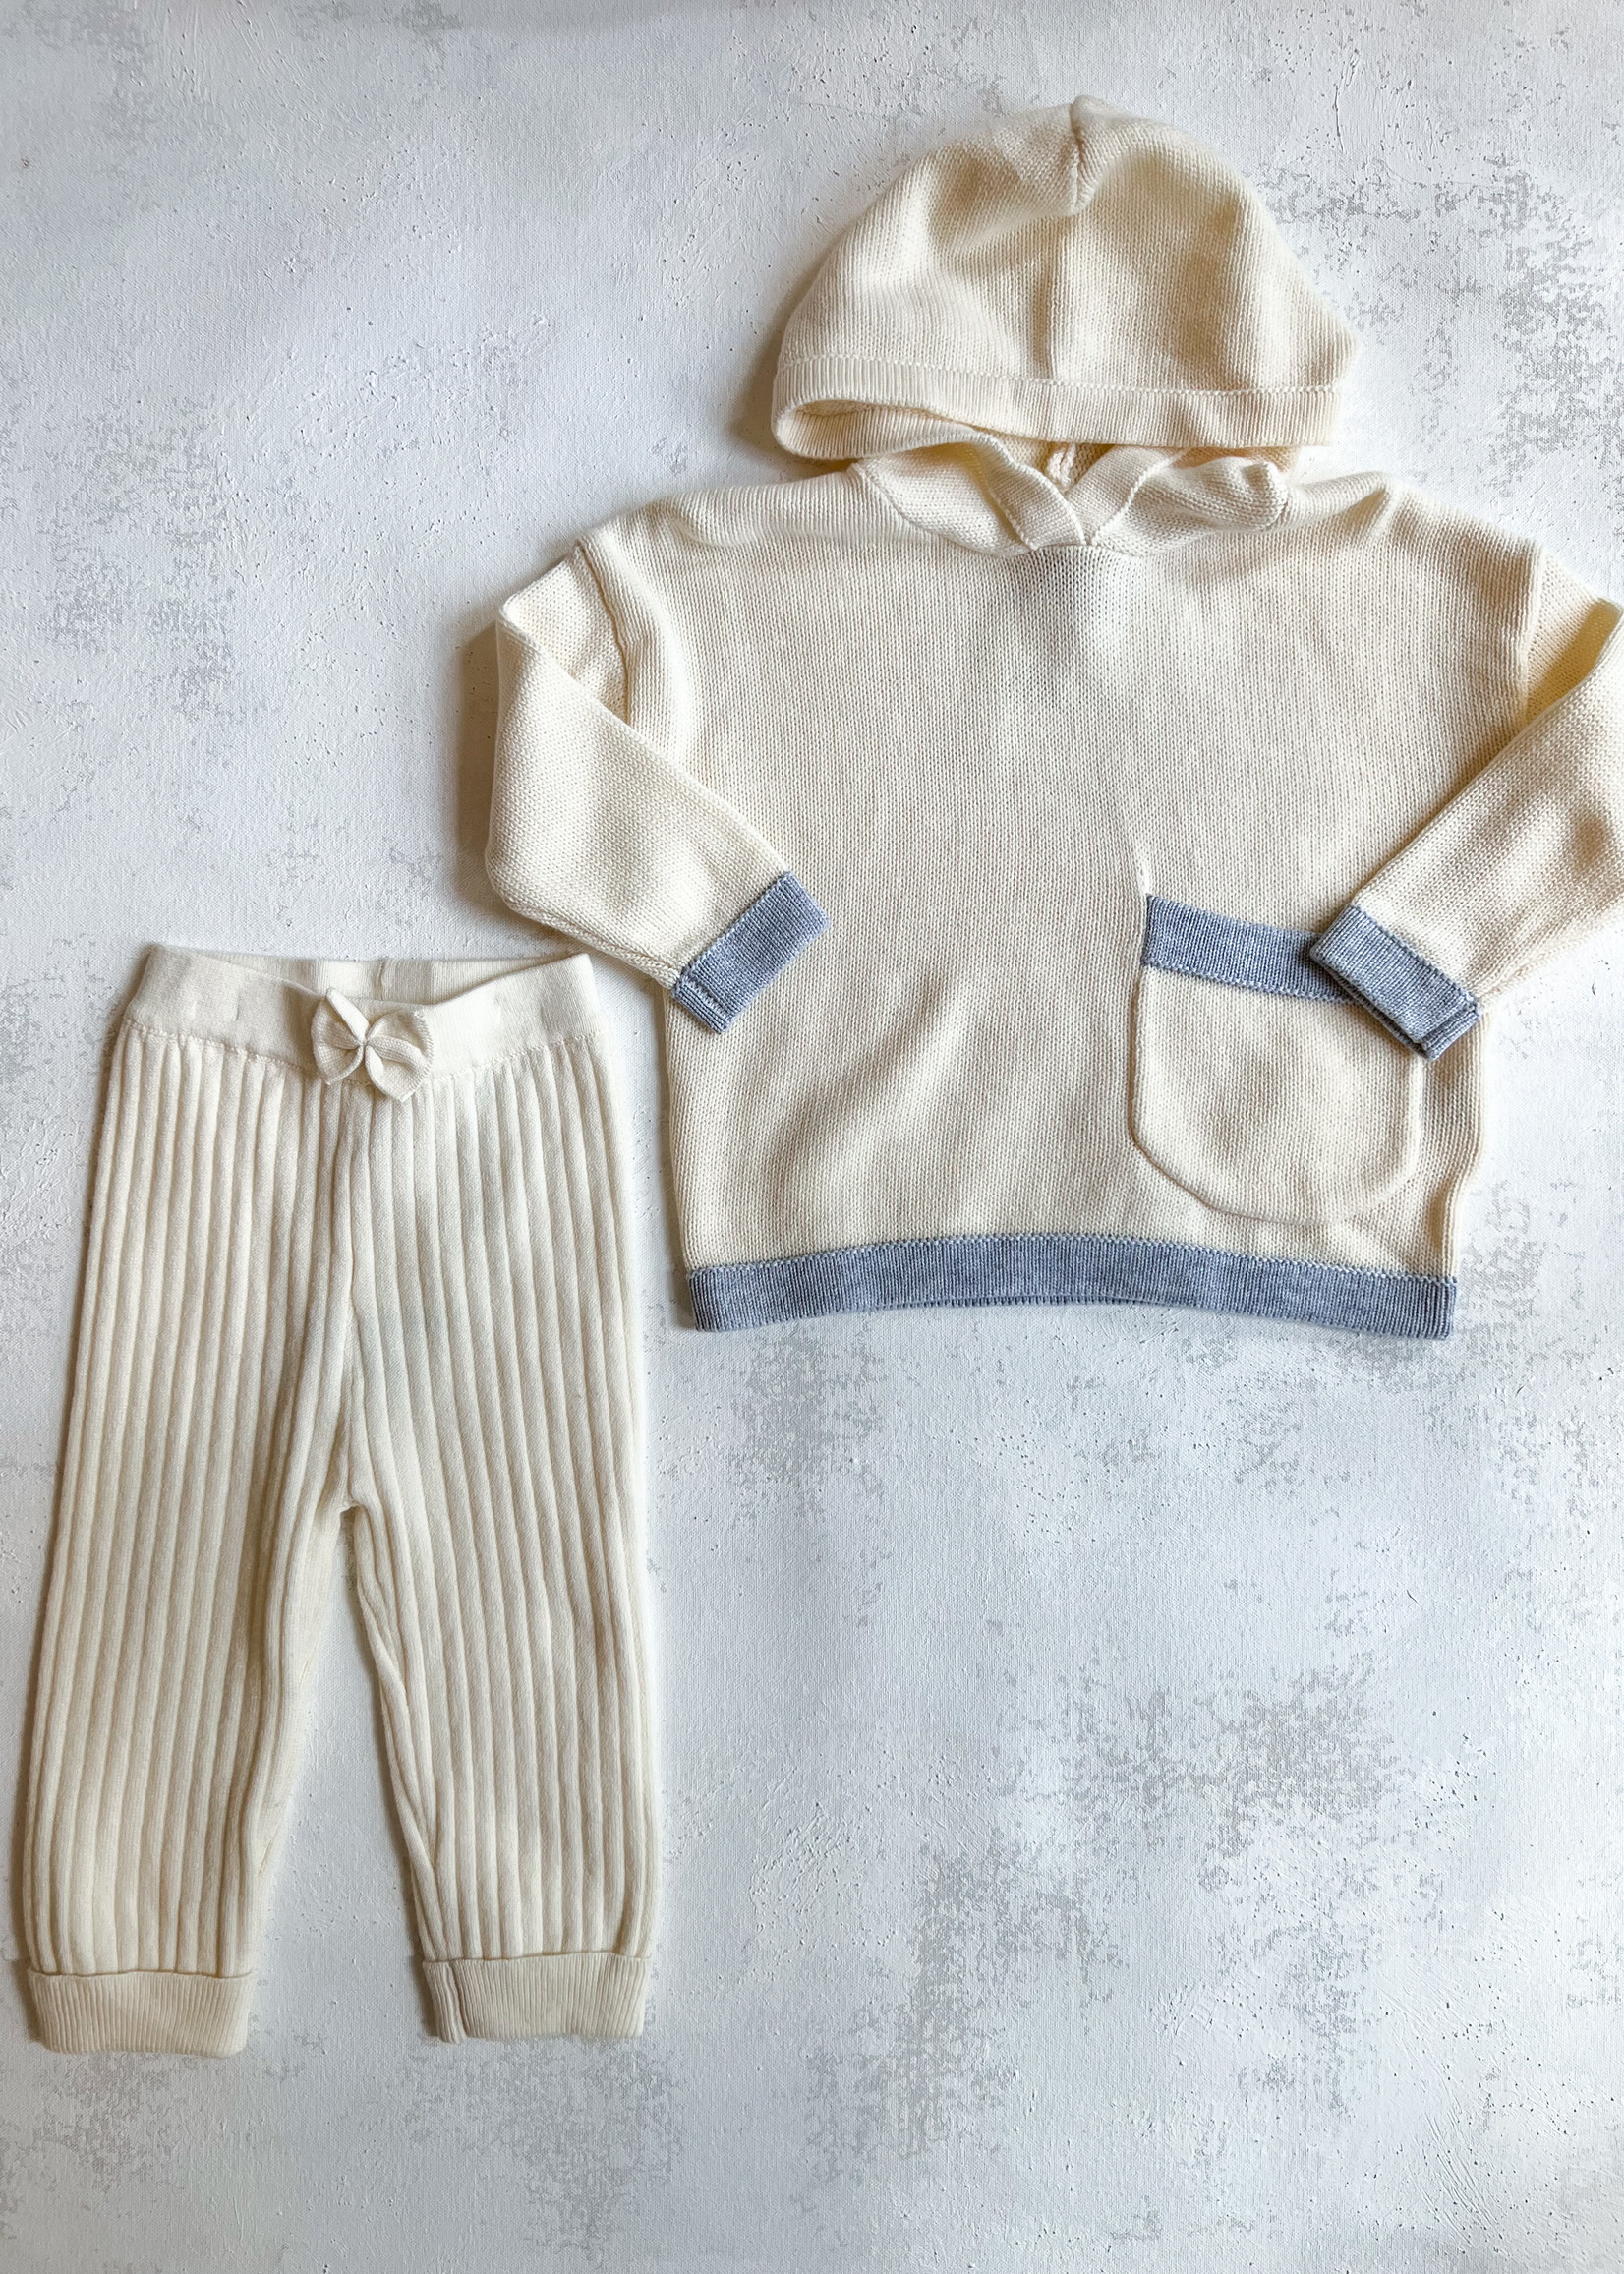 Elitaire Petite Tegan Sweater in Ivory Grey